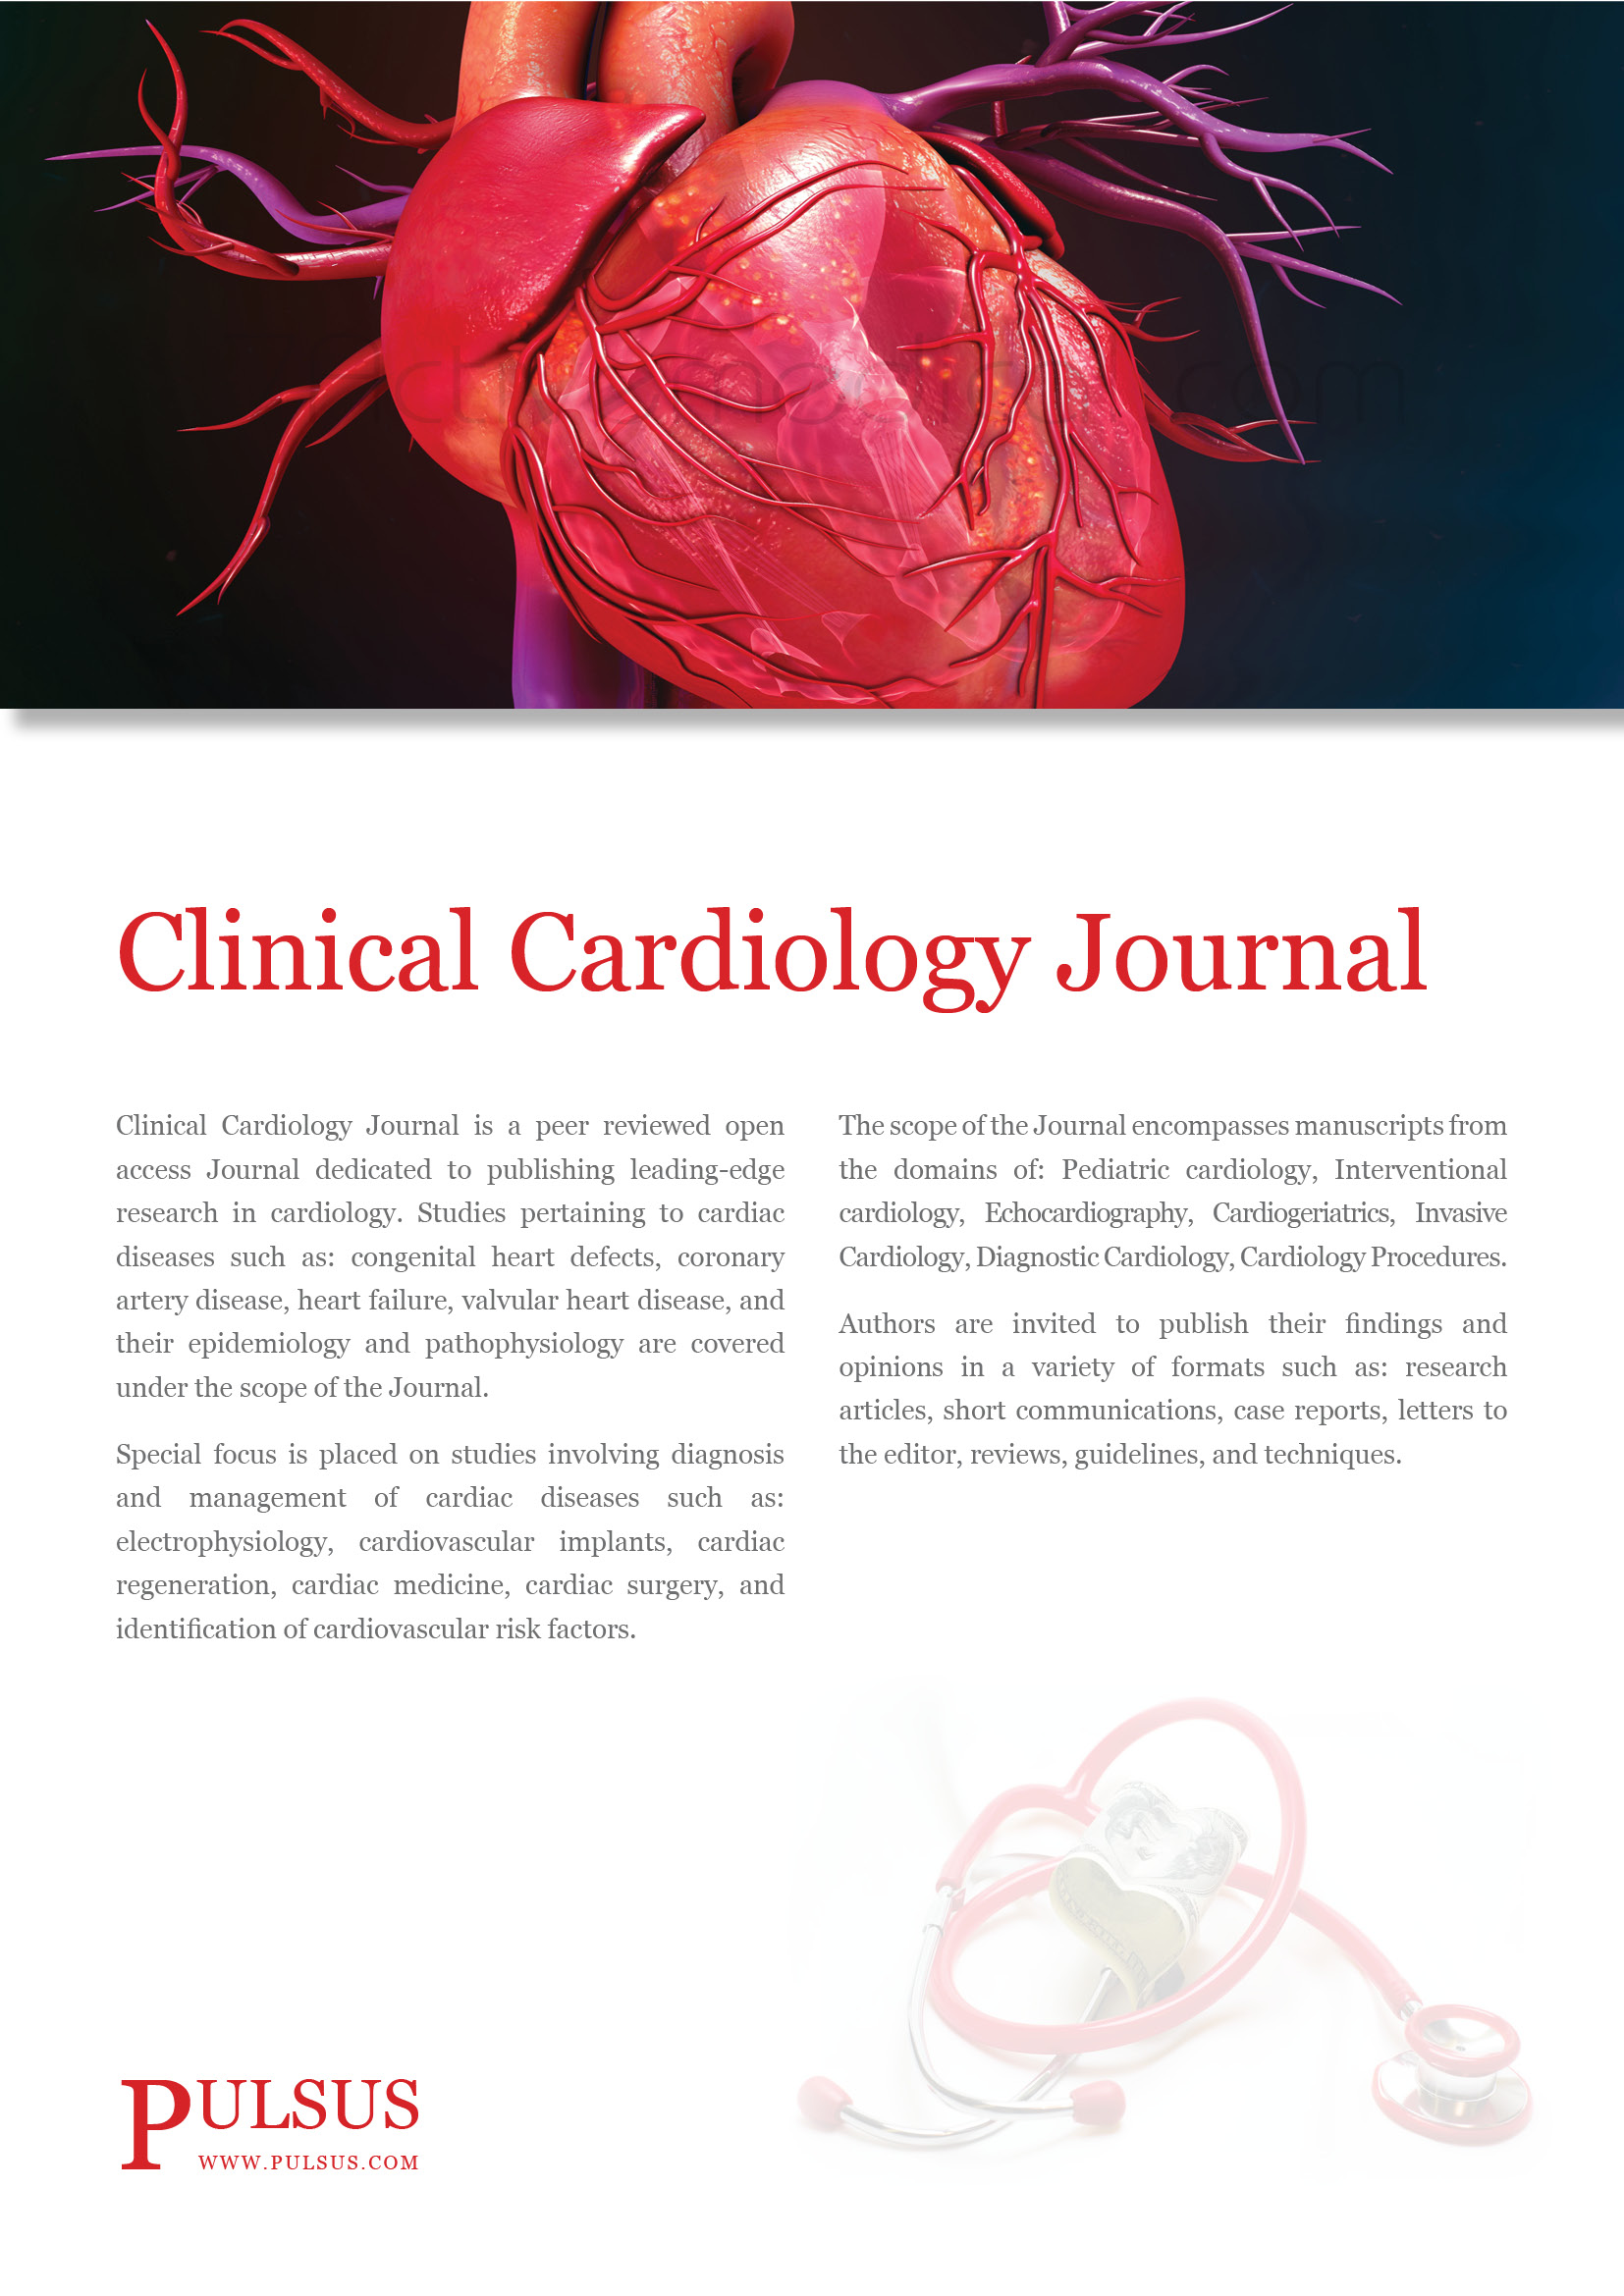 Clinical Cardiology Journal